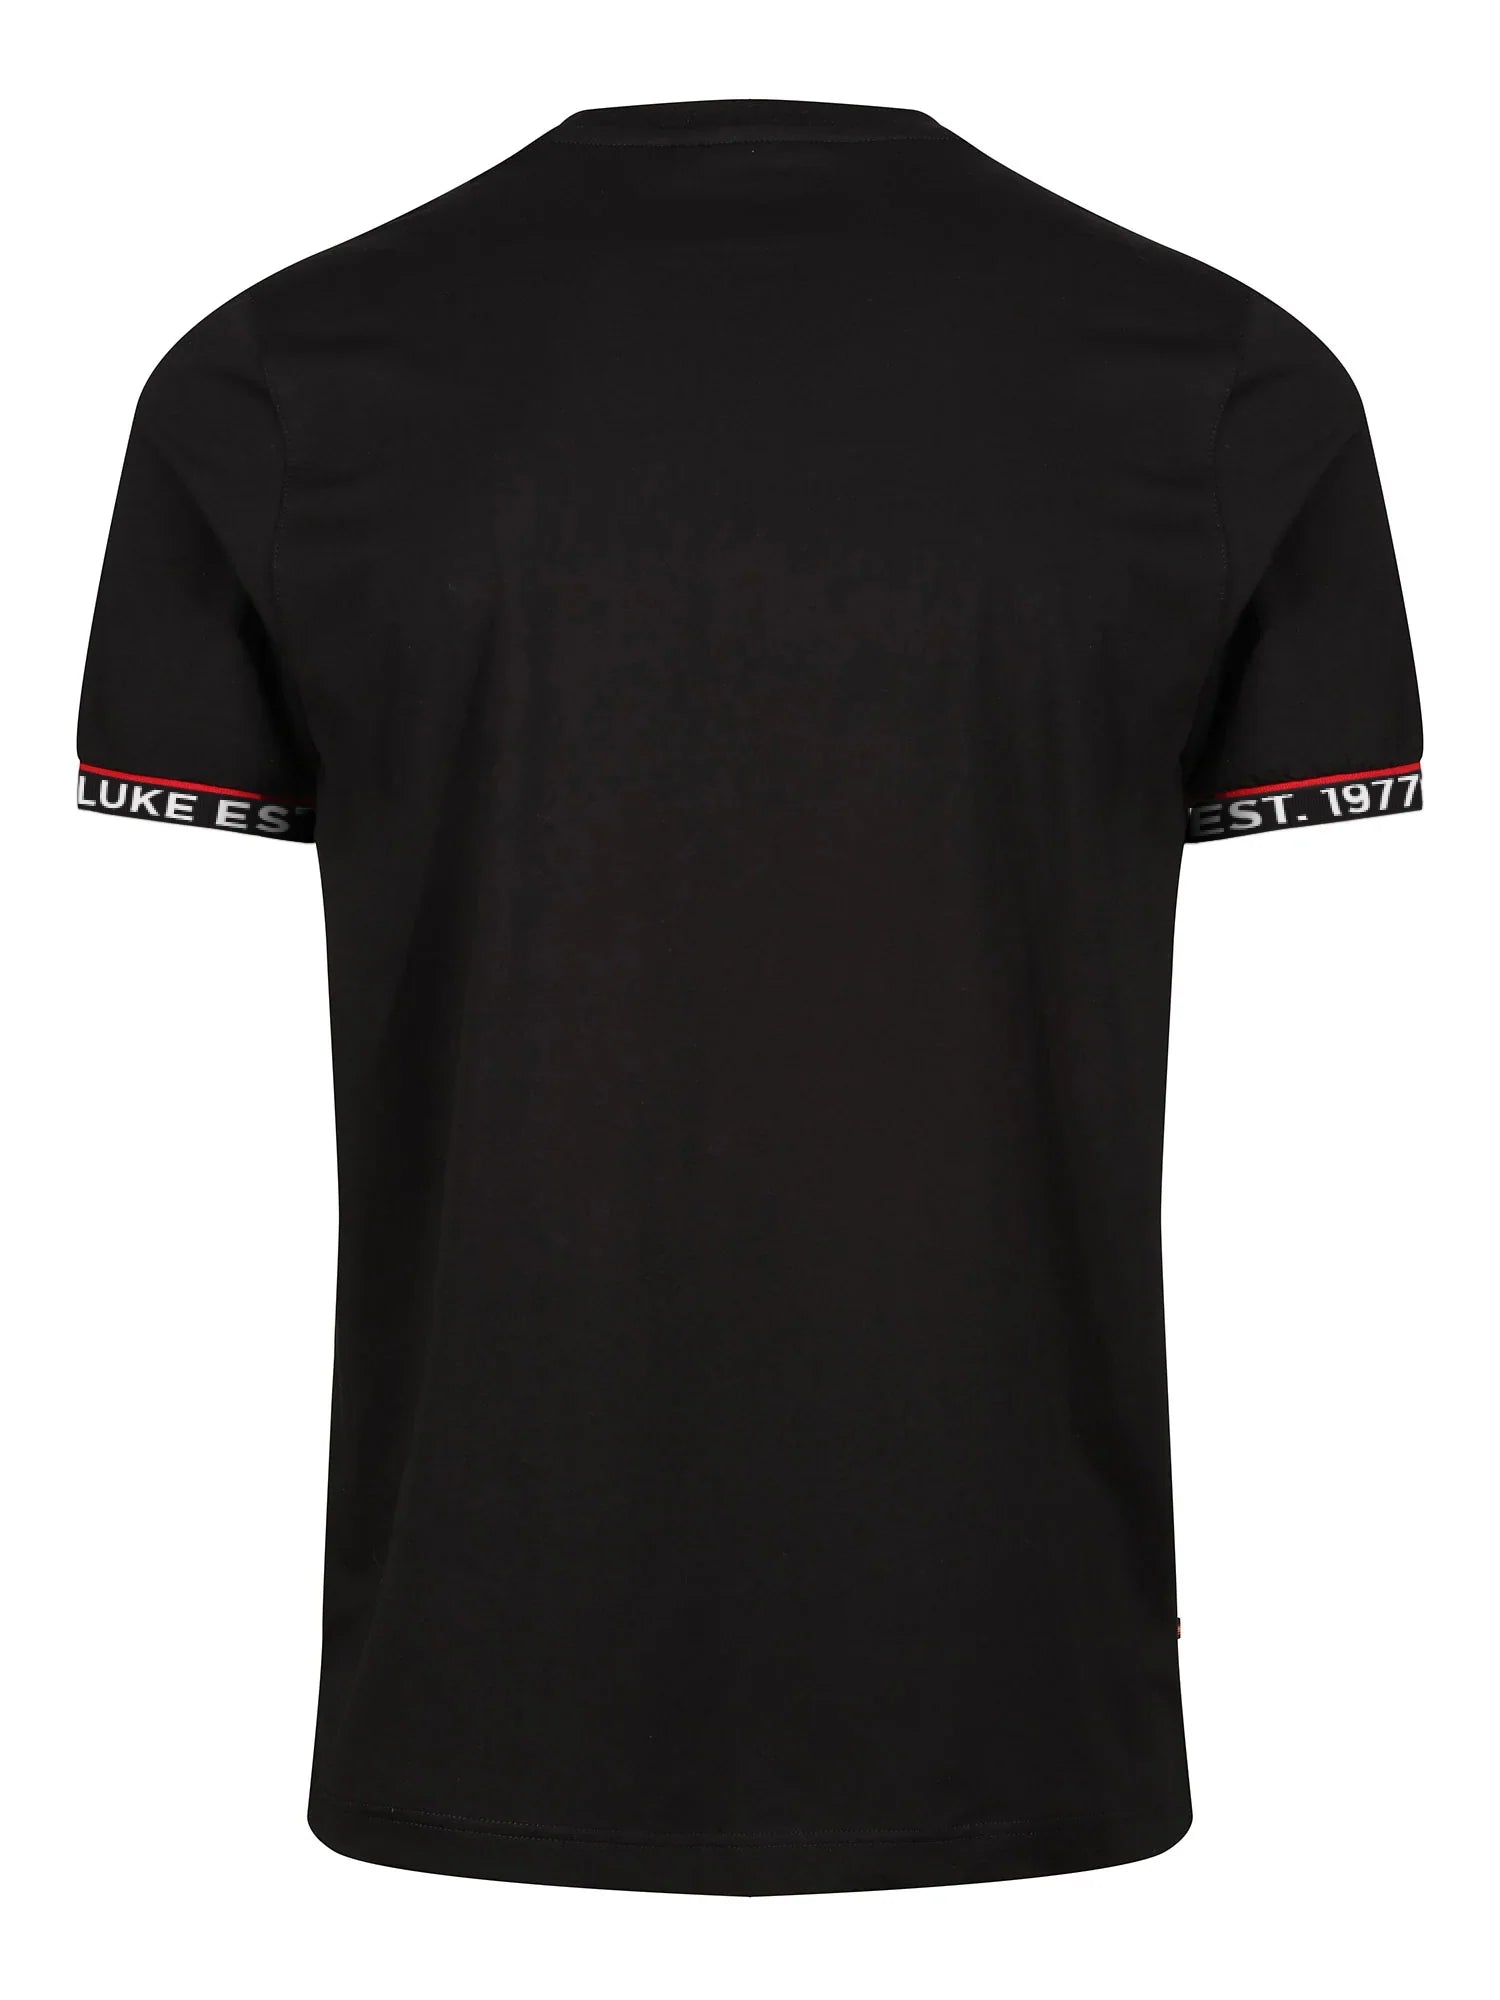 Luke San Diego T-Shirt Black